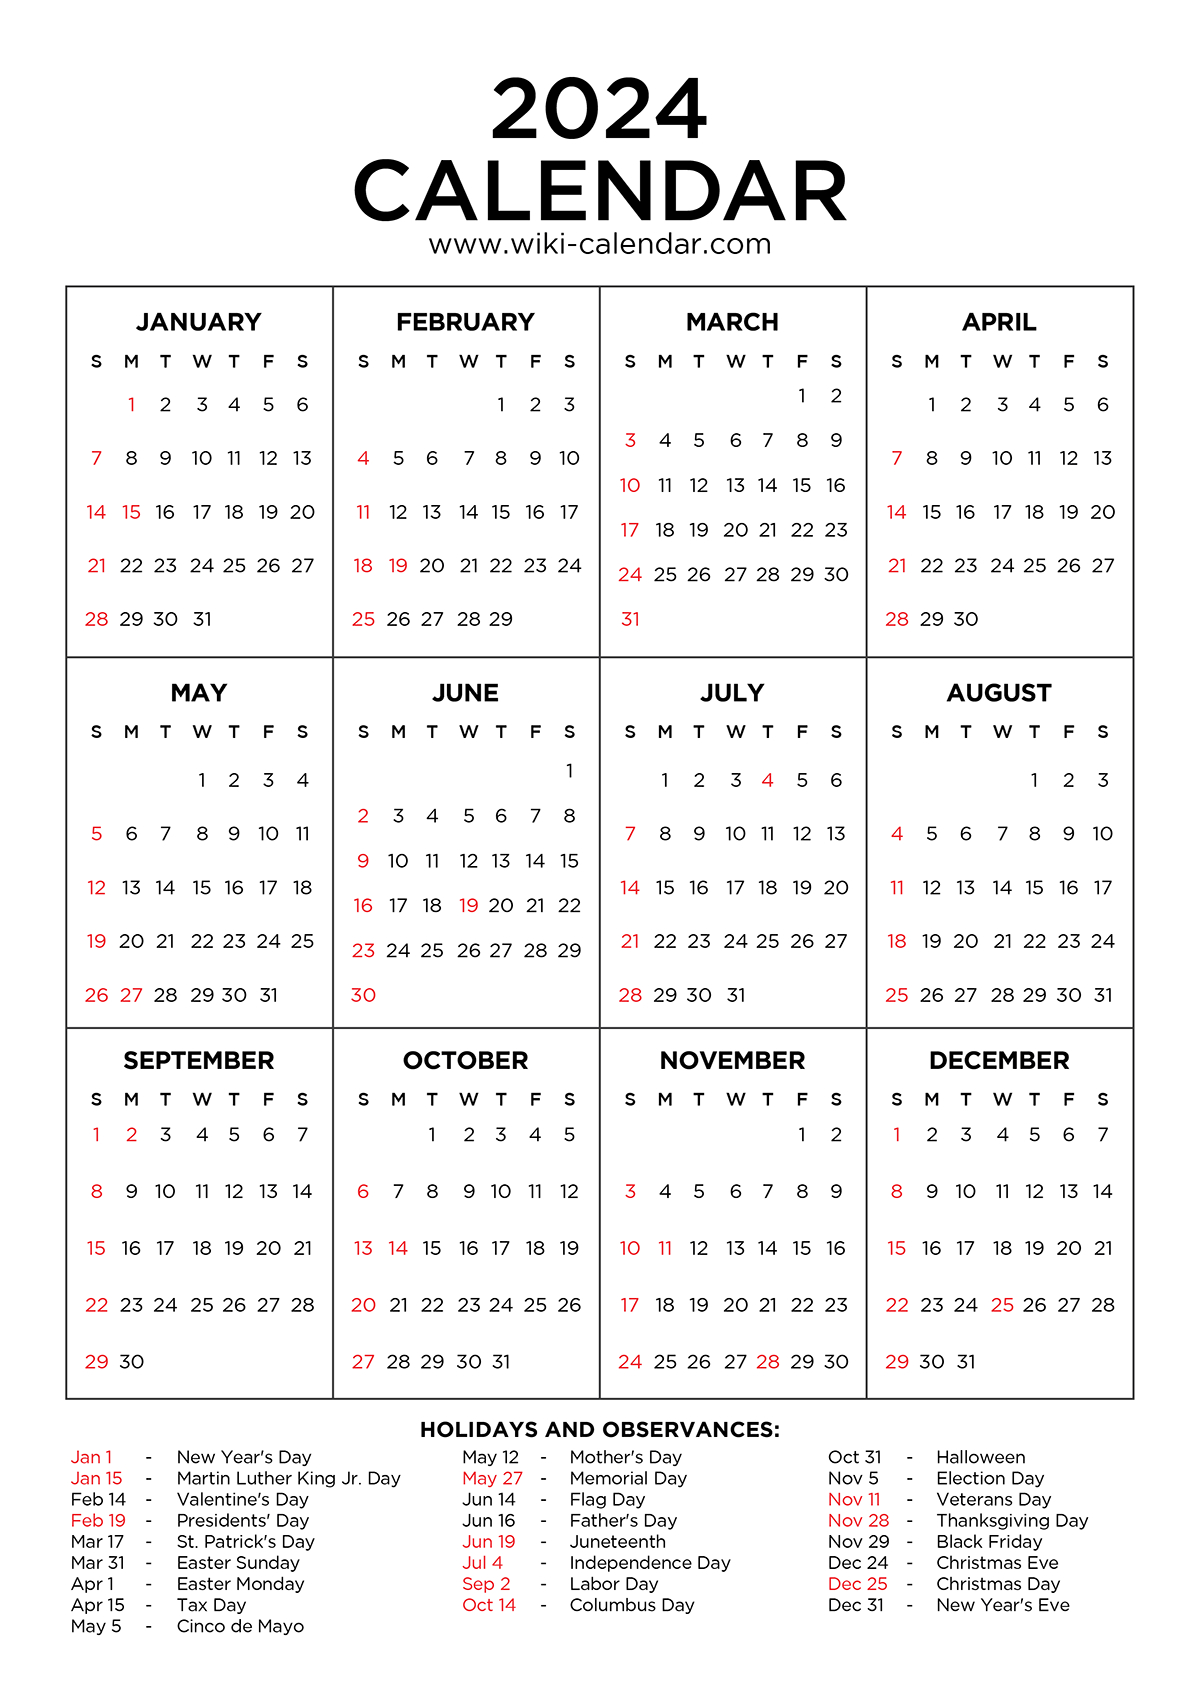 Year 2024 Calendar Printable With Holidays - Wiki Calendar | 2024 Yearly Calendar Pdf